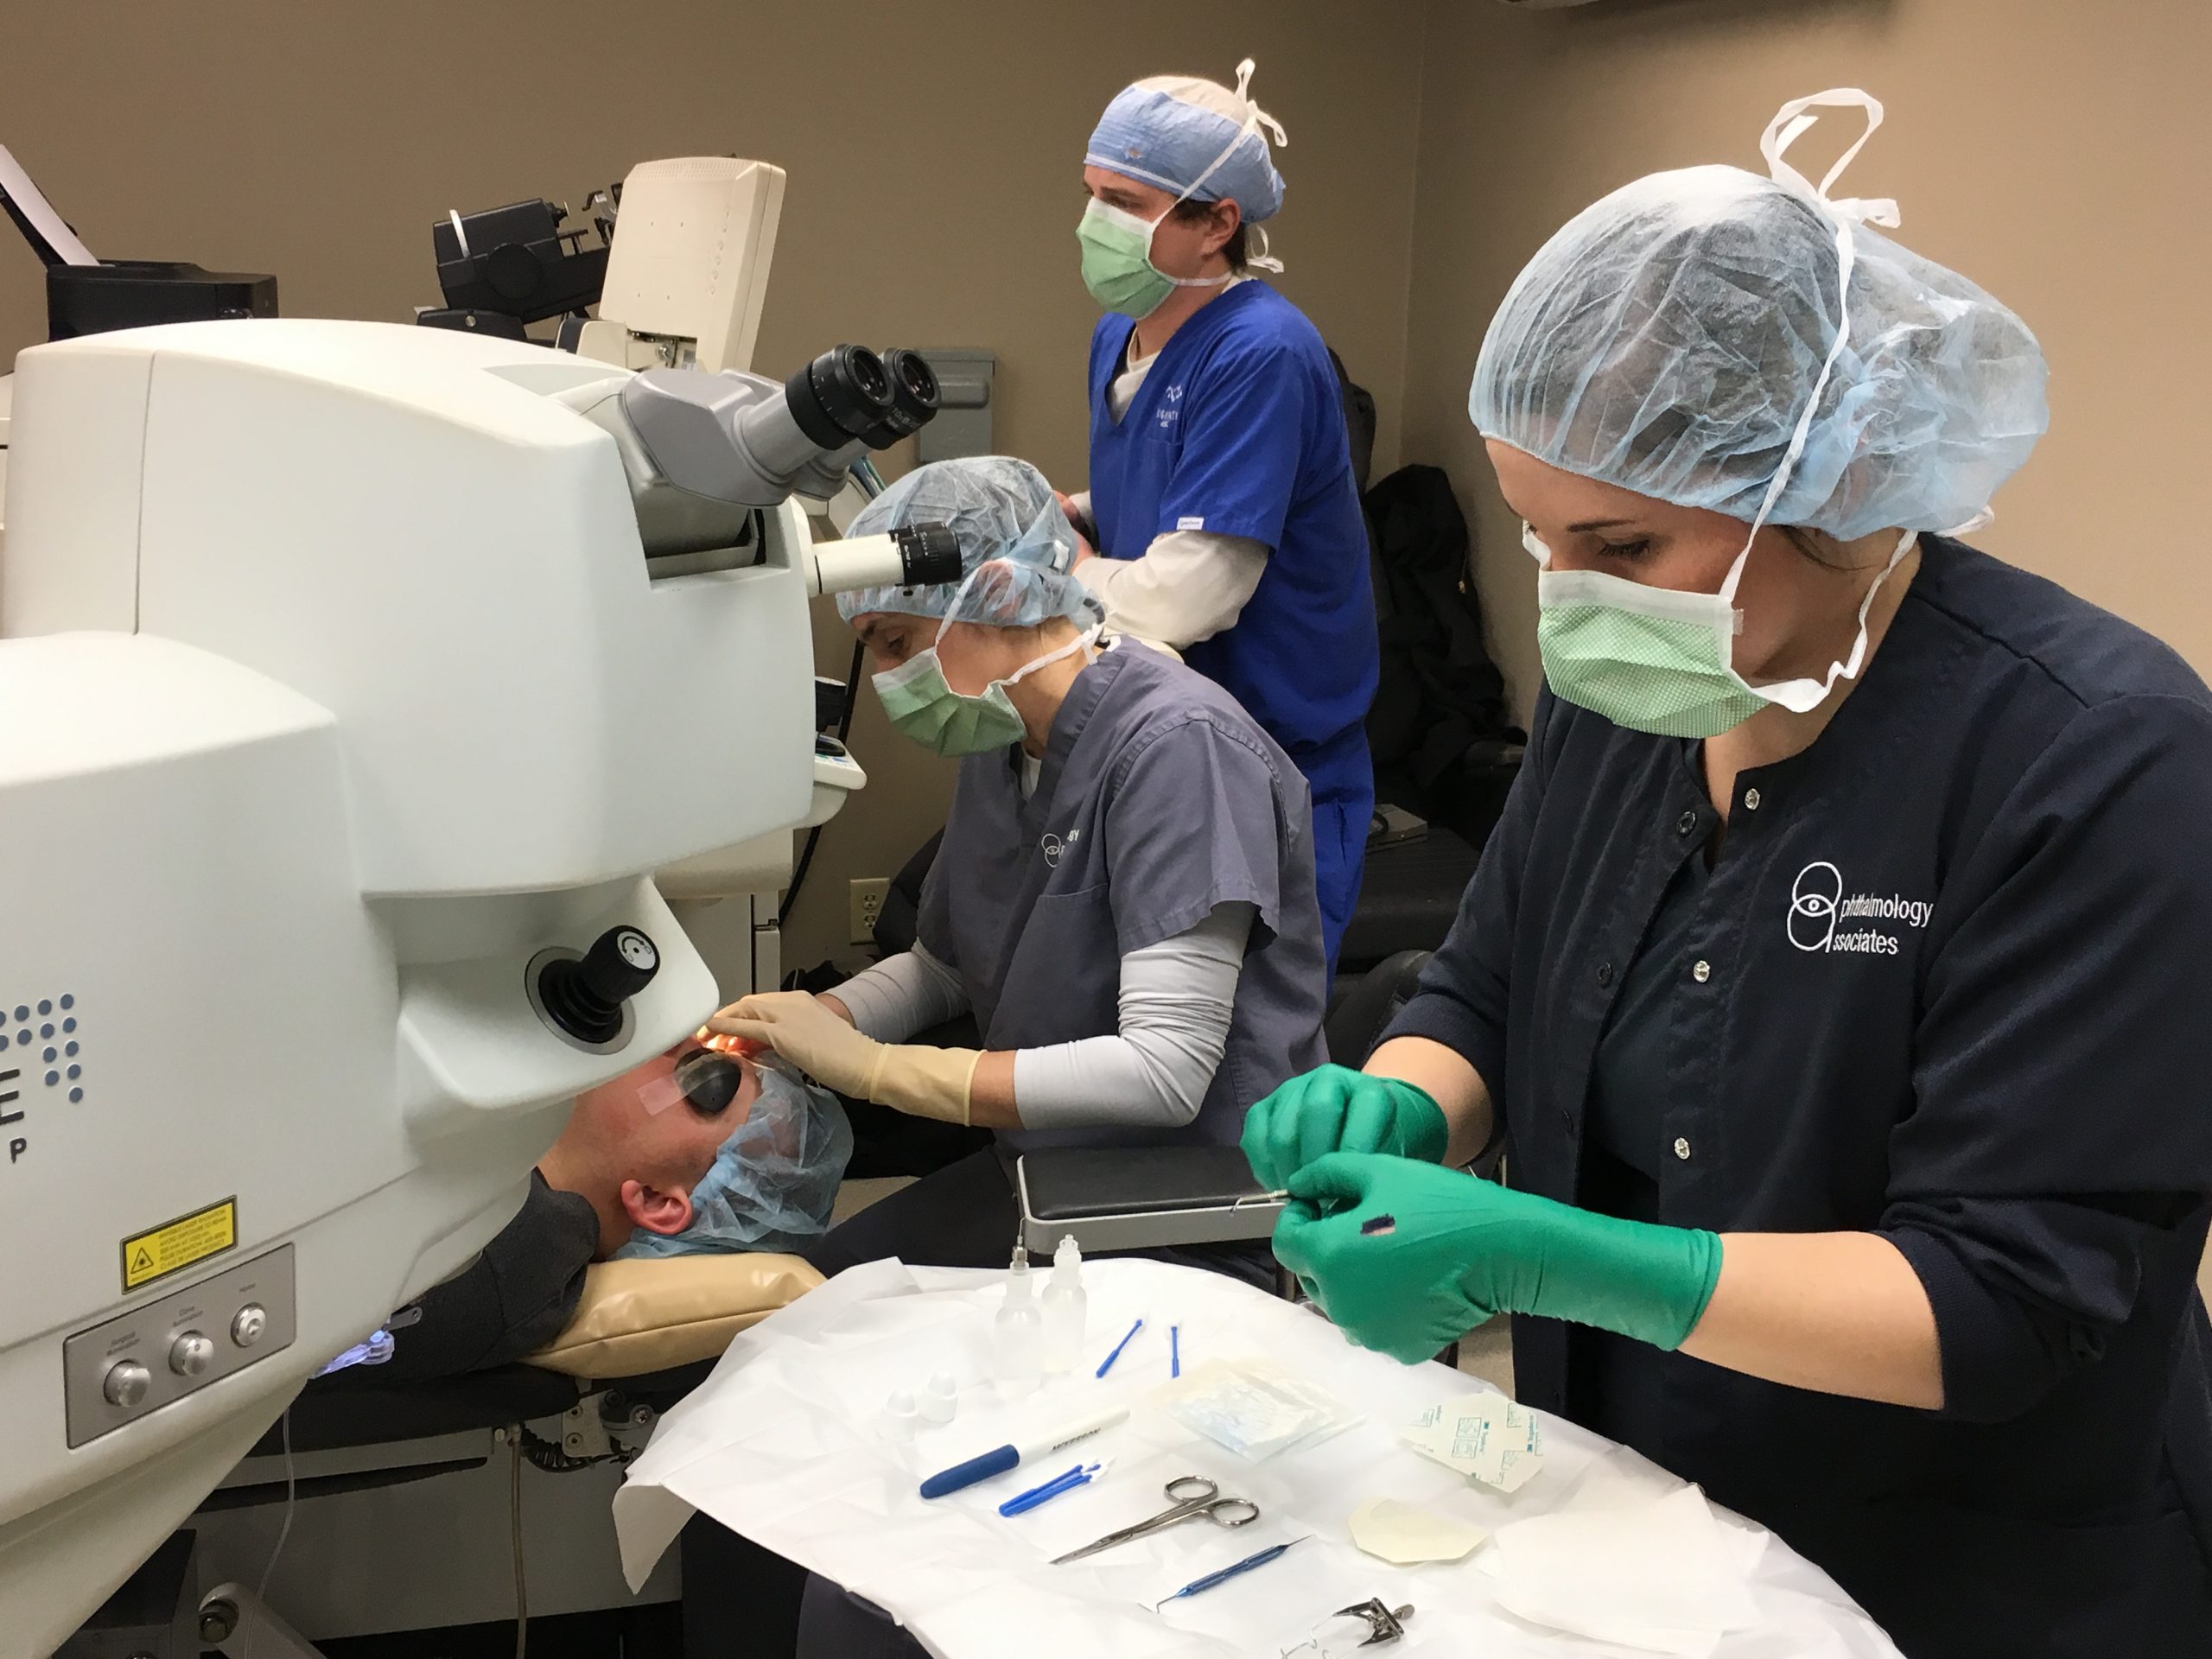 LASIK eye surgery preformed at Ophthalmology Associates in Mankato.